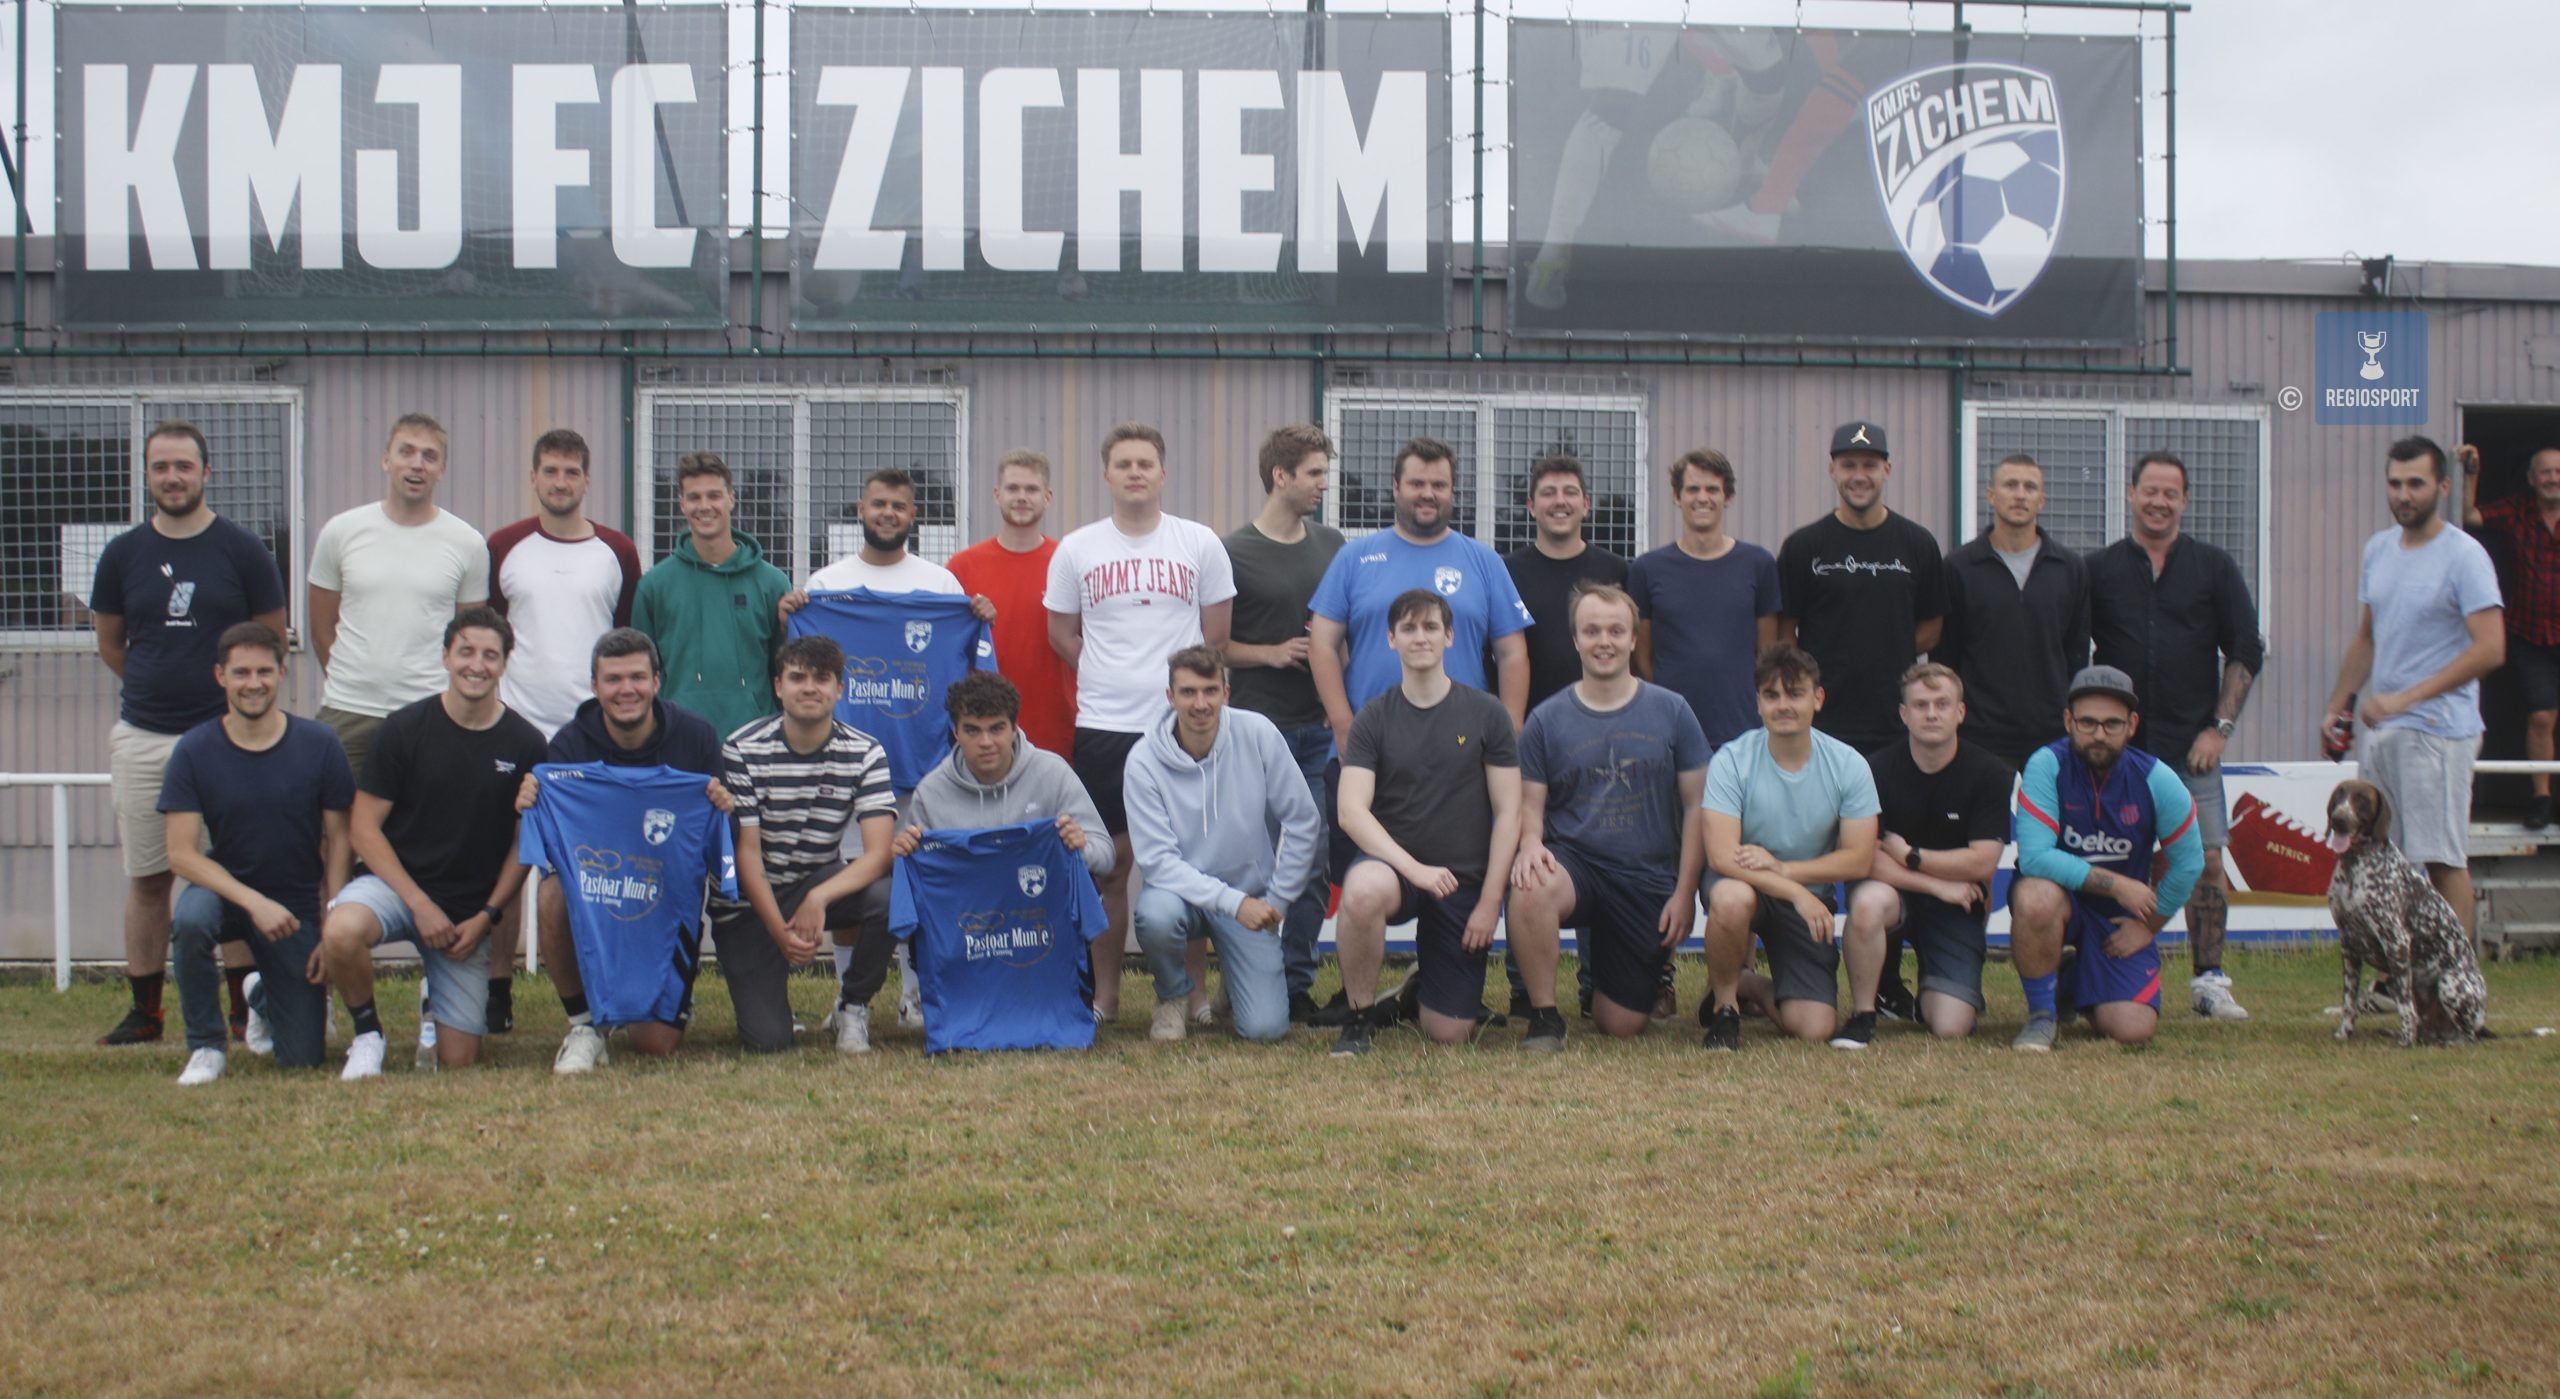 KMJ FC Zichem anno 2022-2023